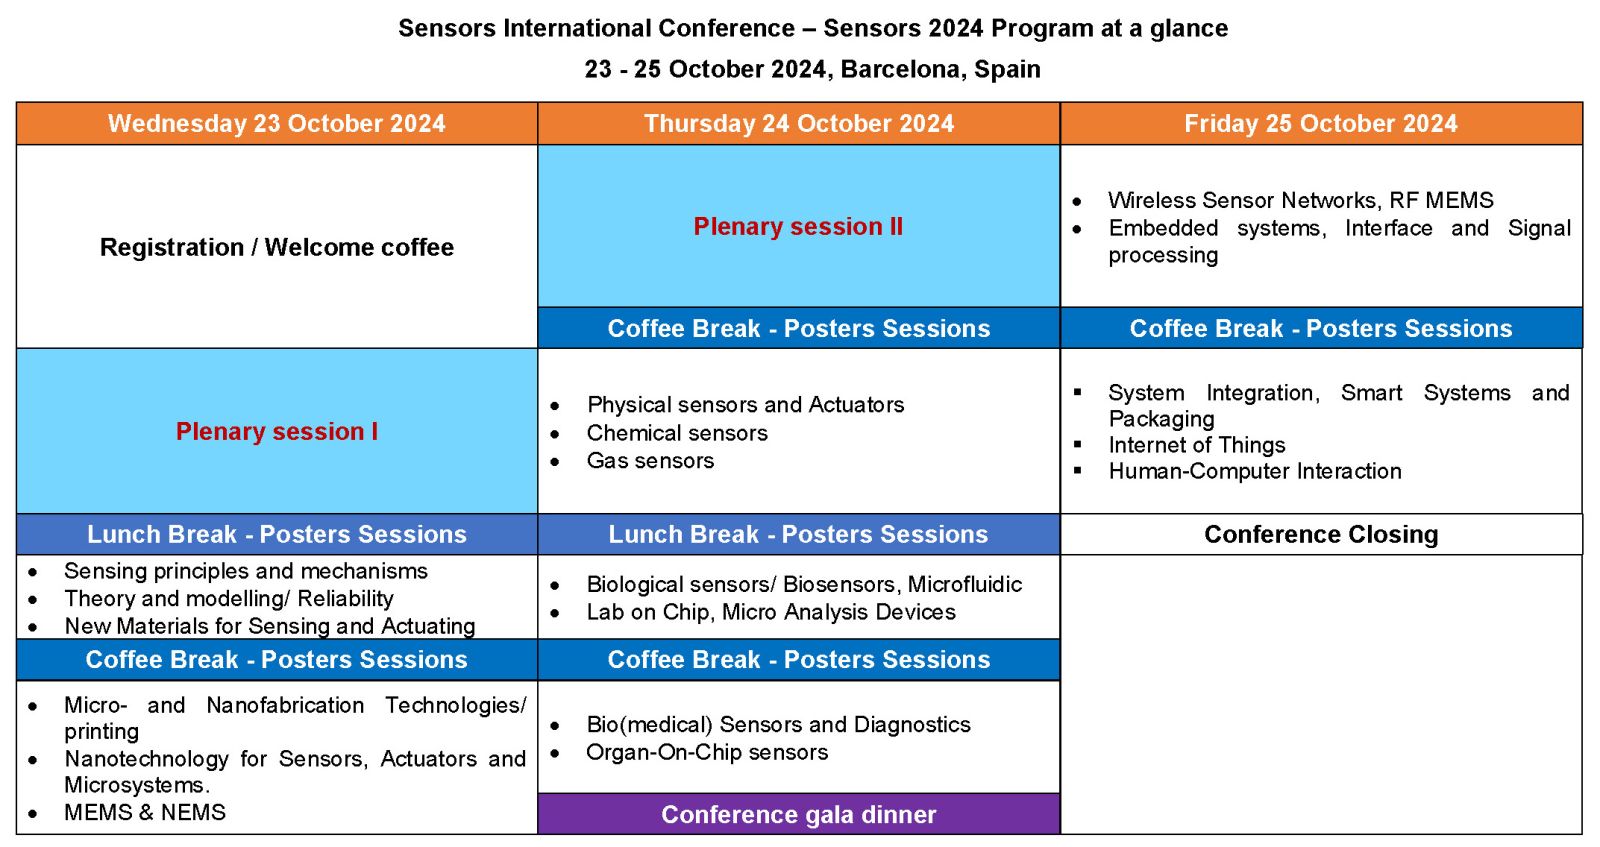 Sensors 2024 Program at a Glance